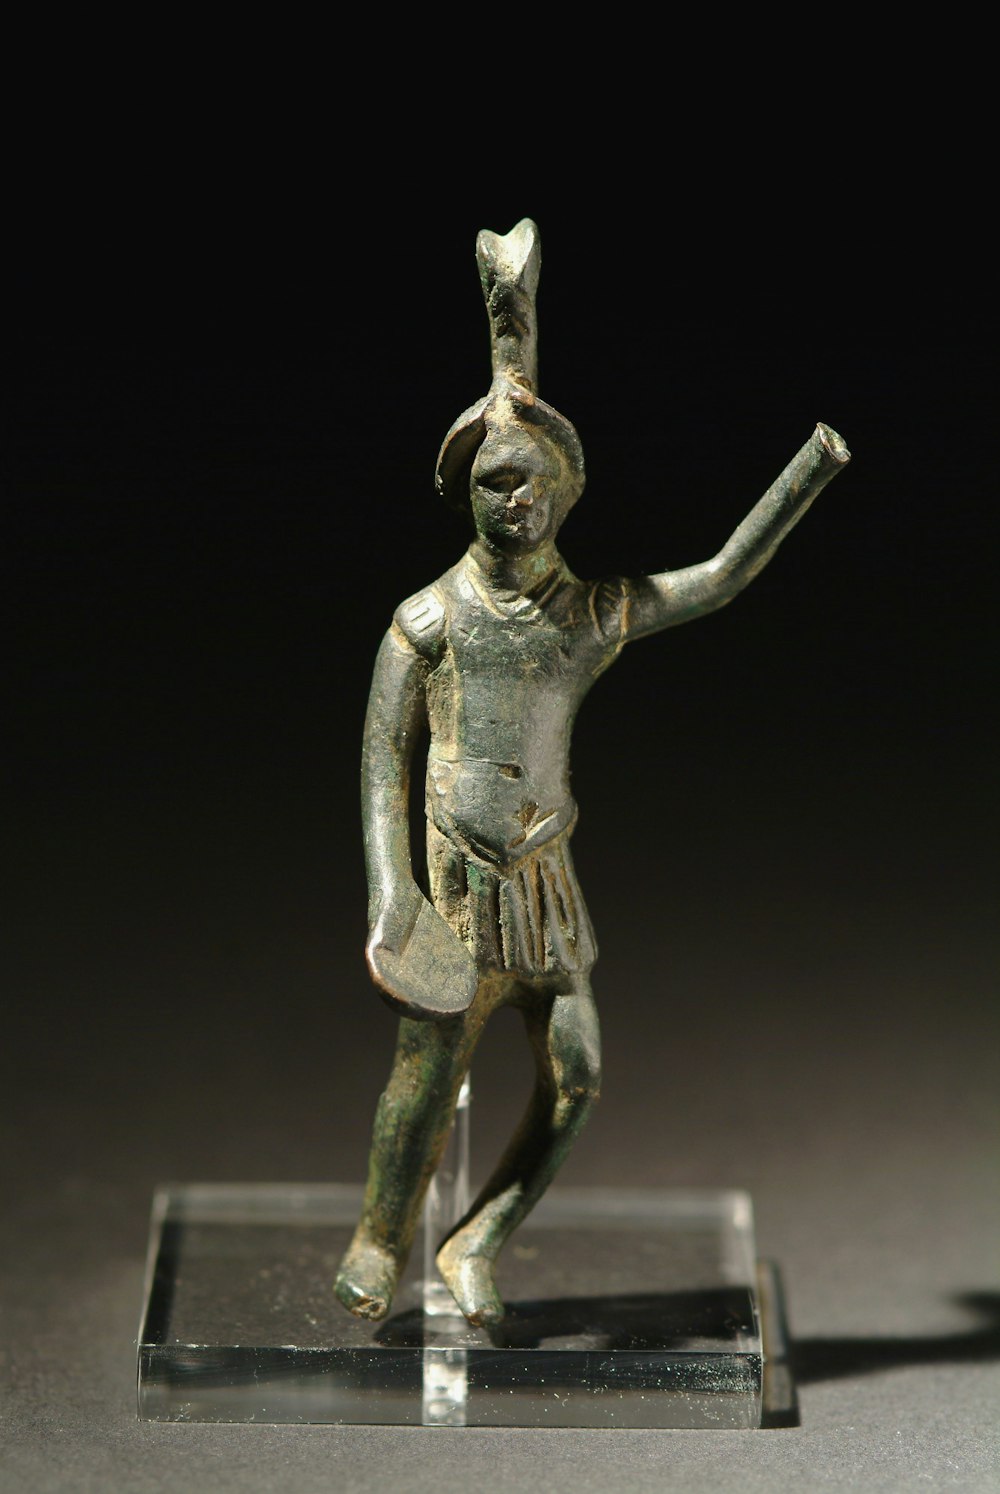 a bronze figurine of a man holding a sword